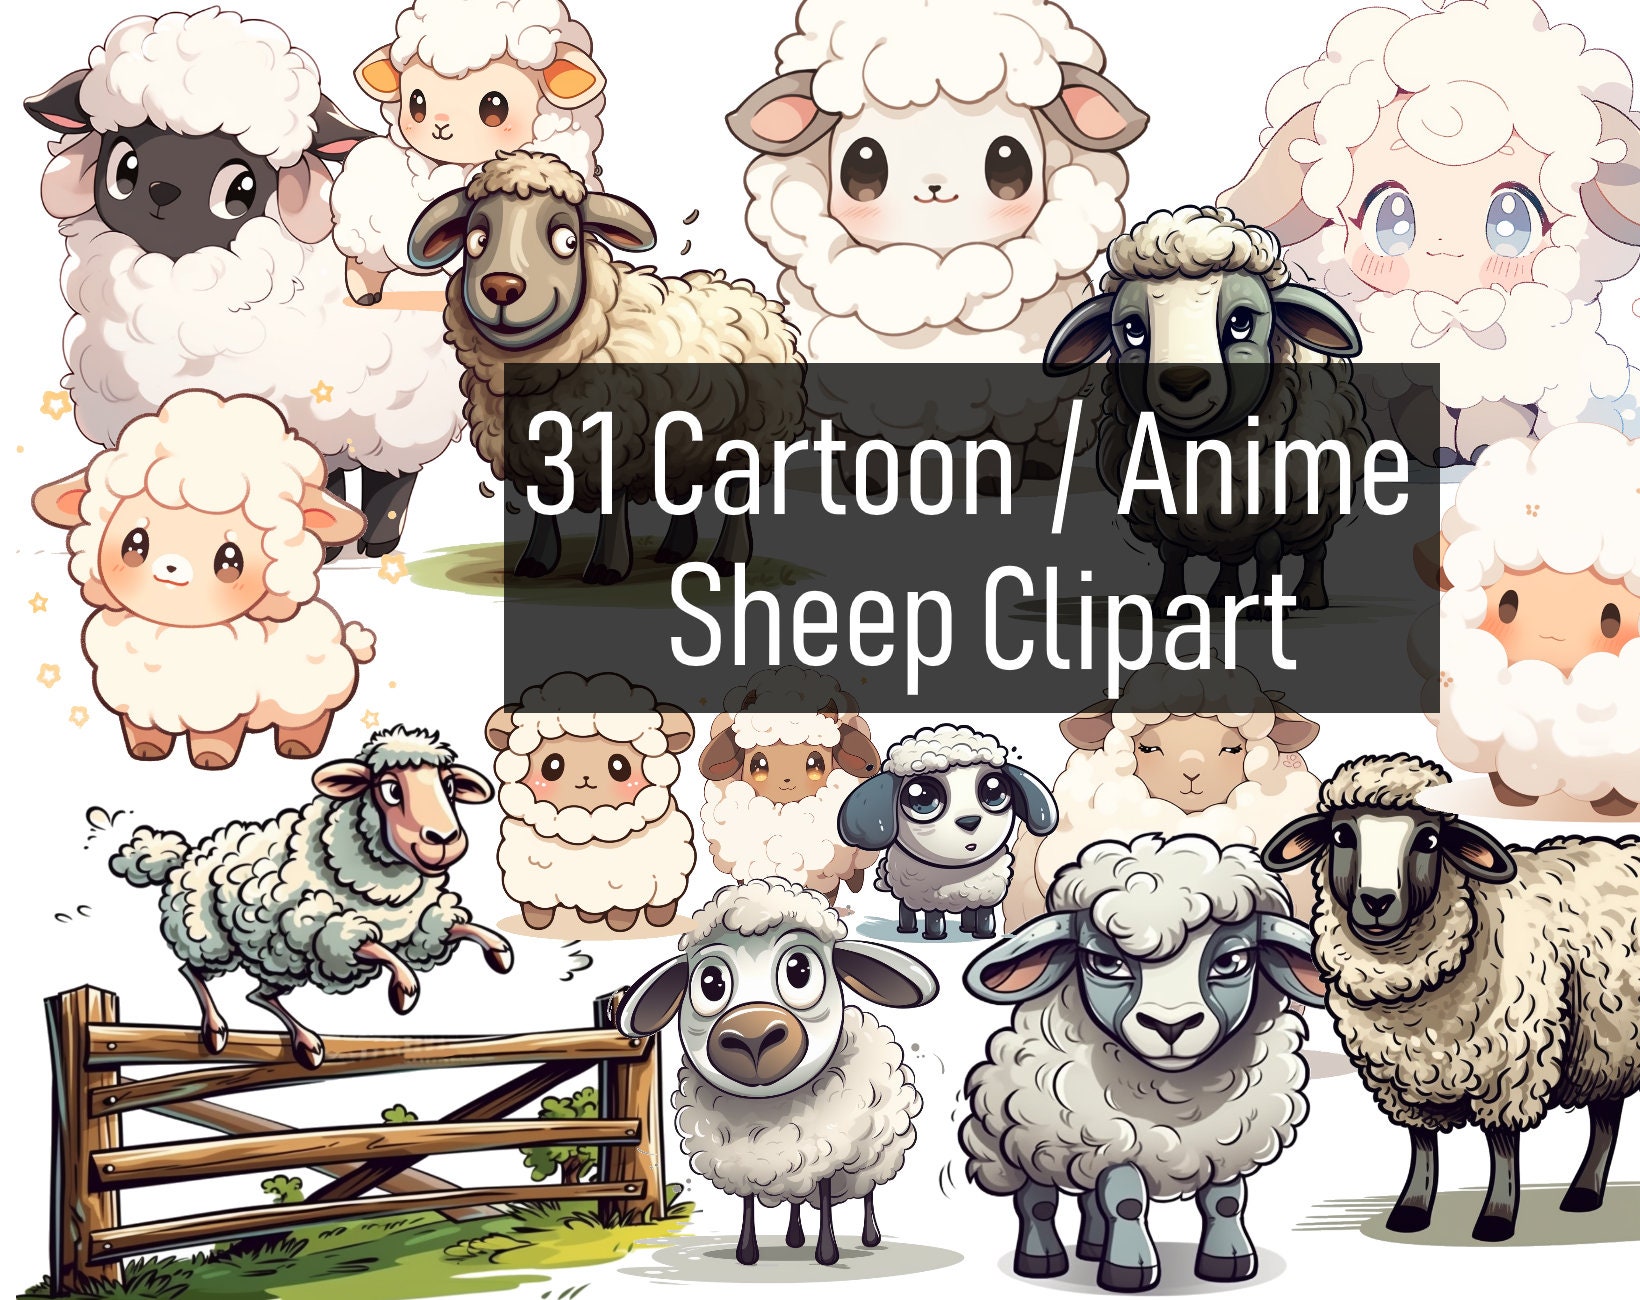 Sheep Year - Anime Manga World Wallpapers and Images - Desktop Nexus Groups